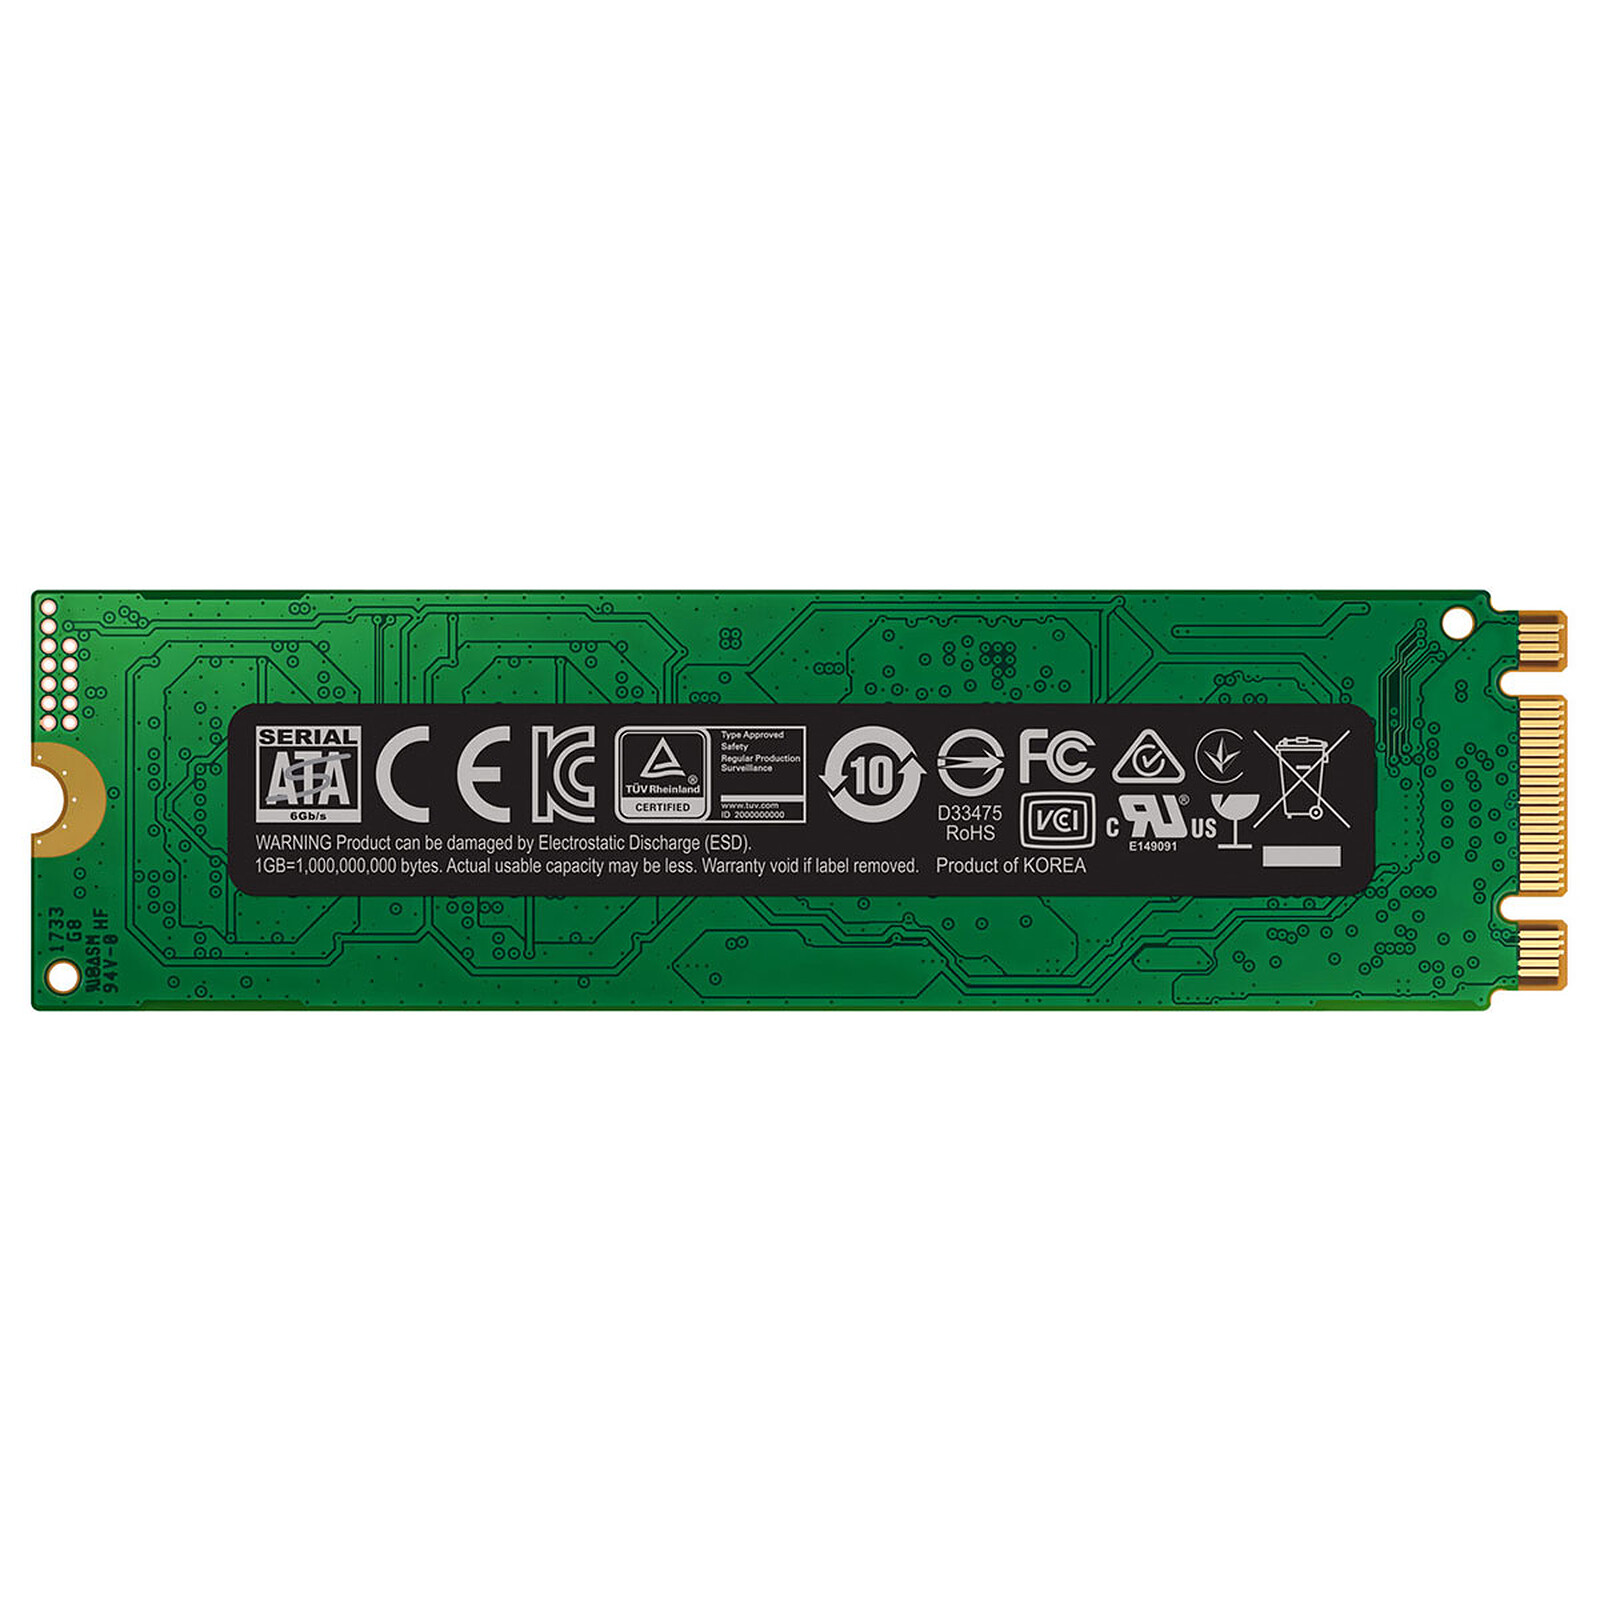 Samsung SSD 980 M.2 PCIe NVMe 250 Go - Disque SSD - LDLC